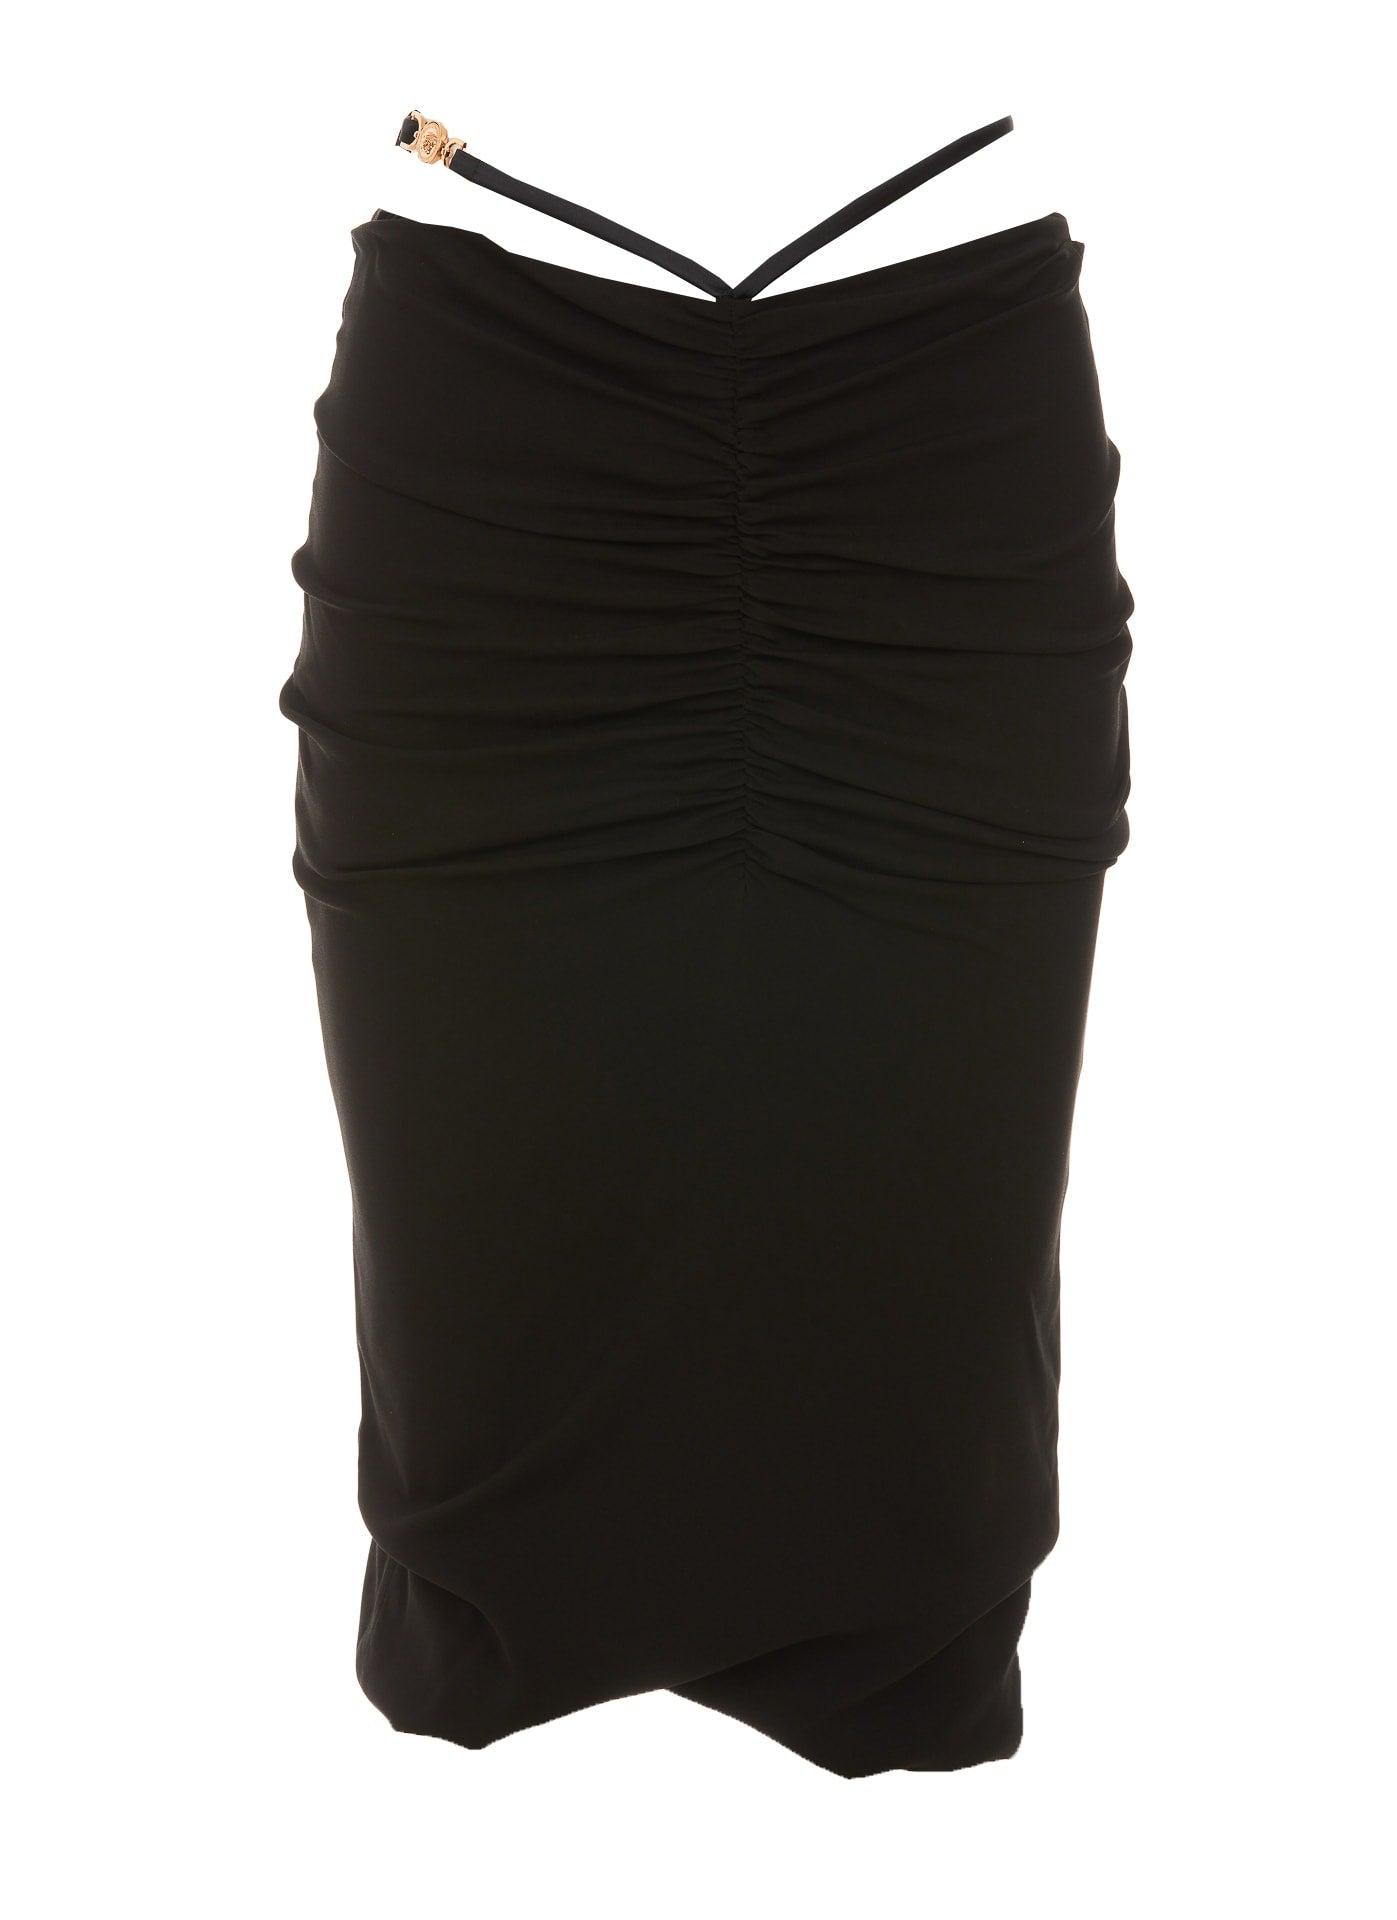 Versace Synthetic Midi Medusa Skirt in Nero (Black) - Save 68% | Lyst UK